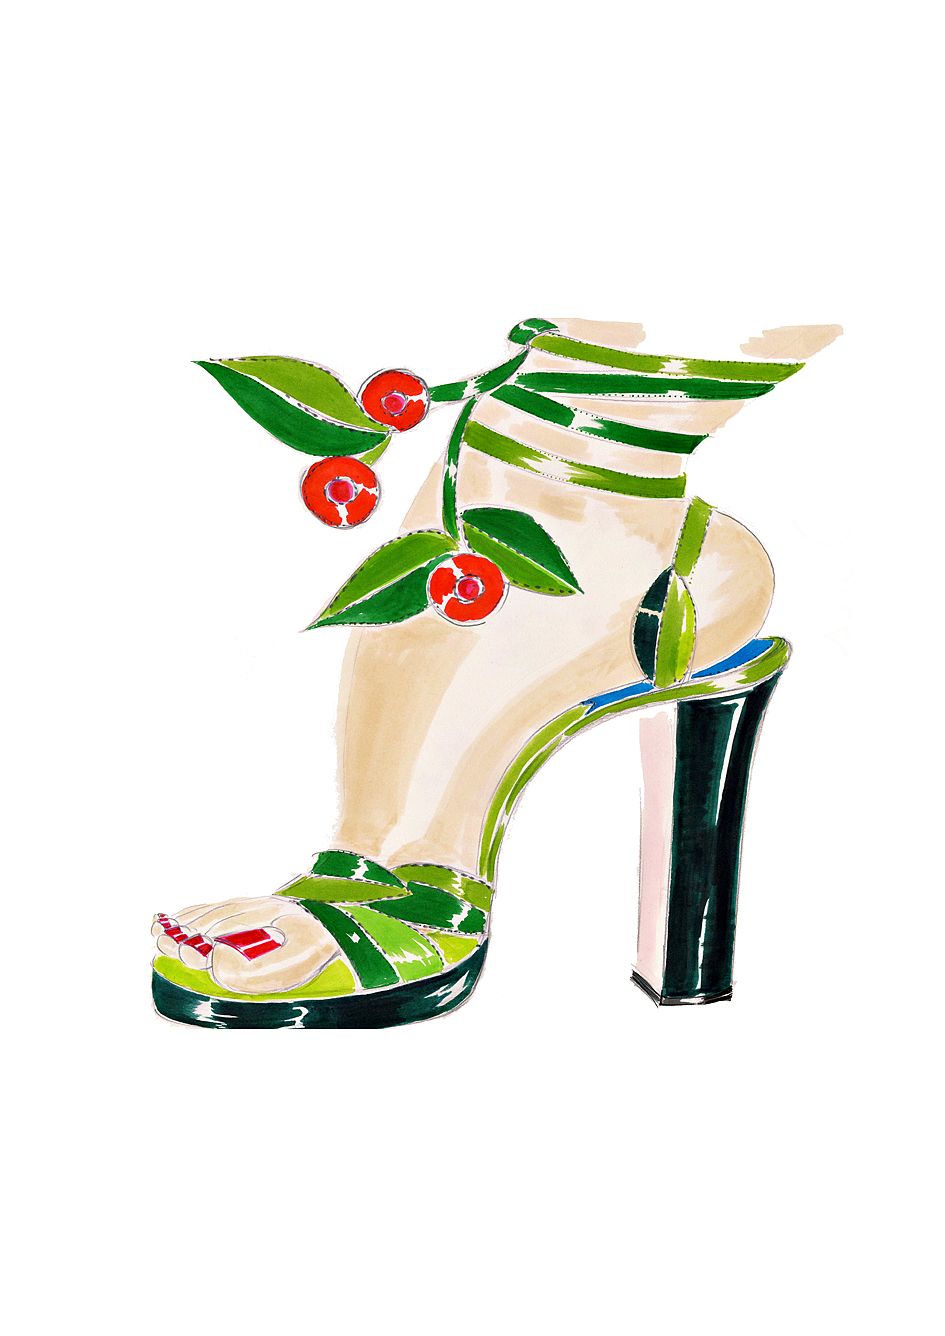 Footwear, Green, High heels, Sandal, Shoe, Plant, Holly, 